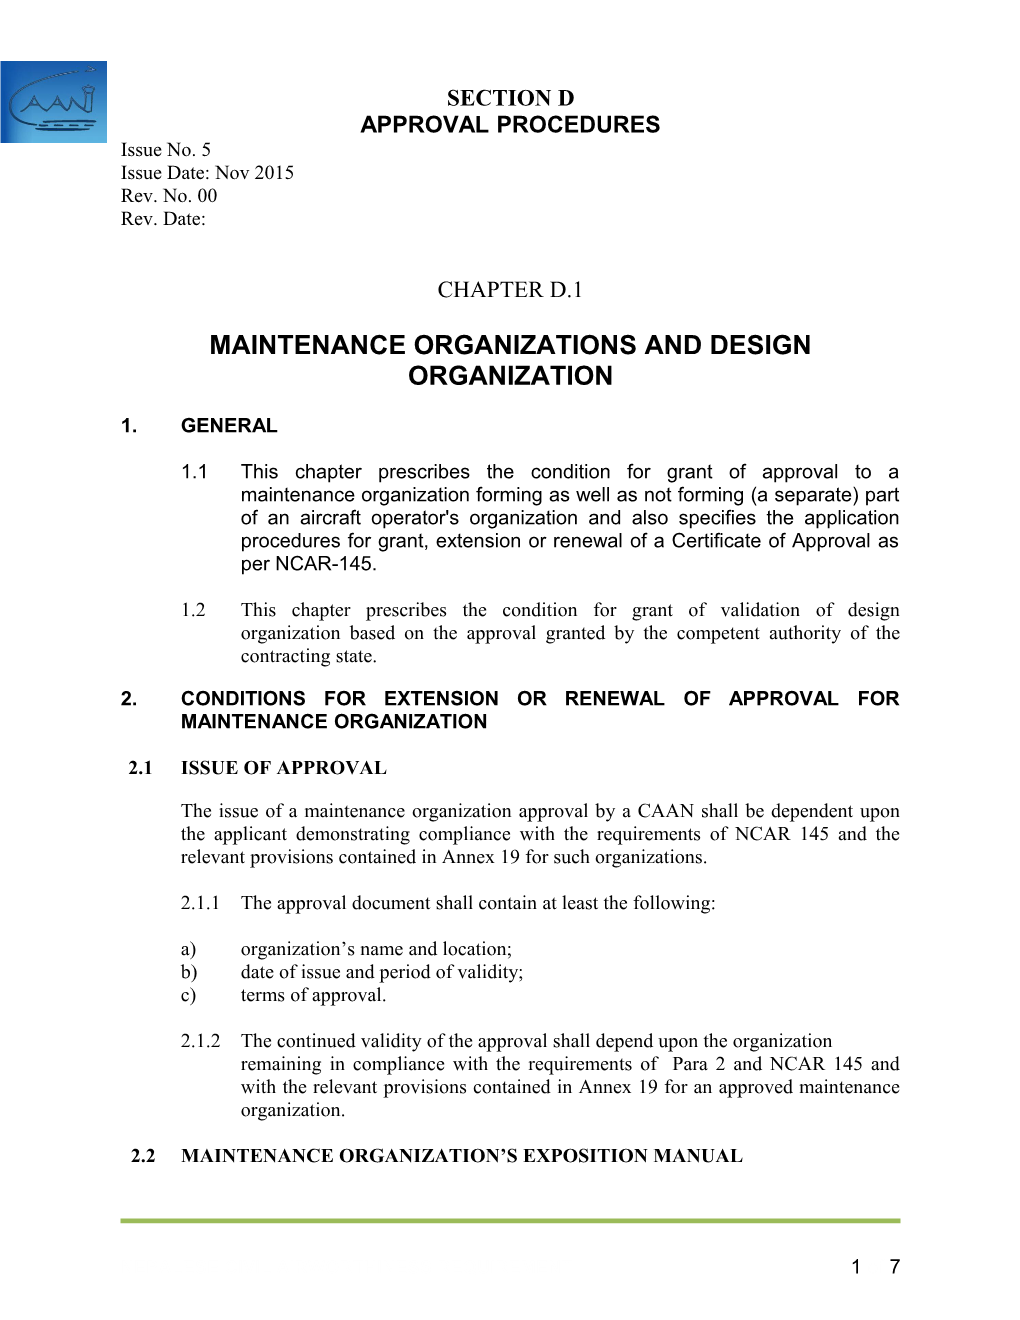 Maintenance Organizations and Design Organization